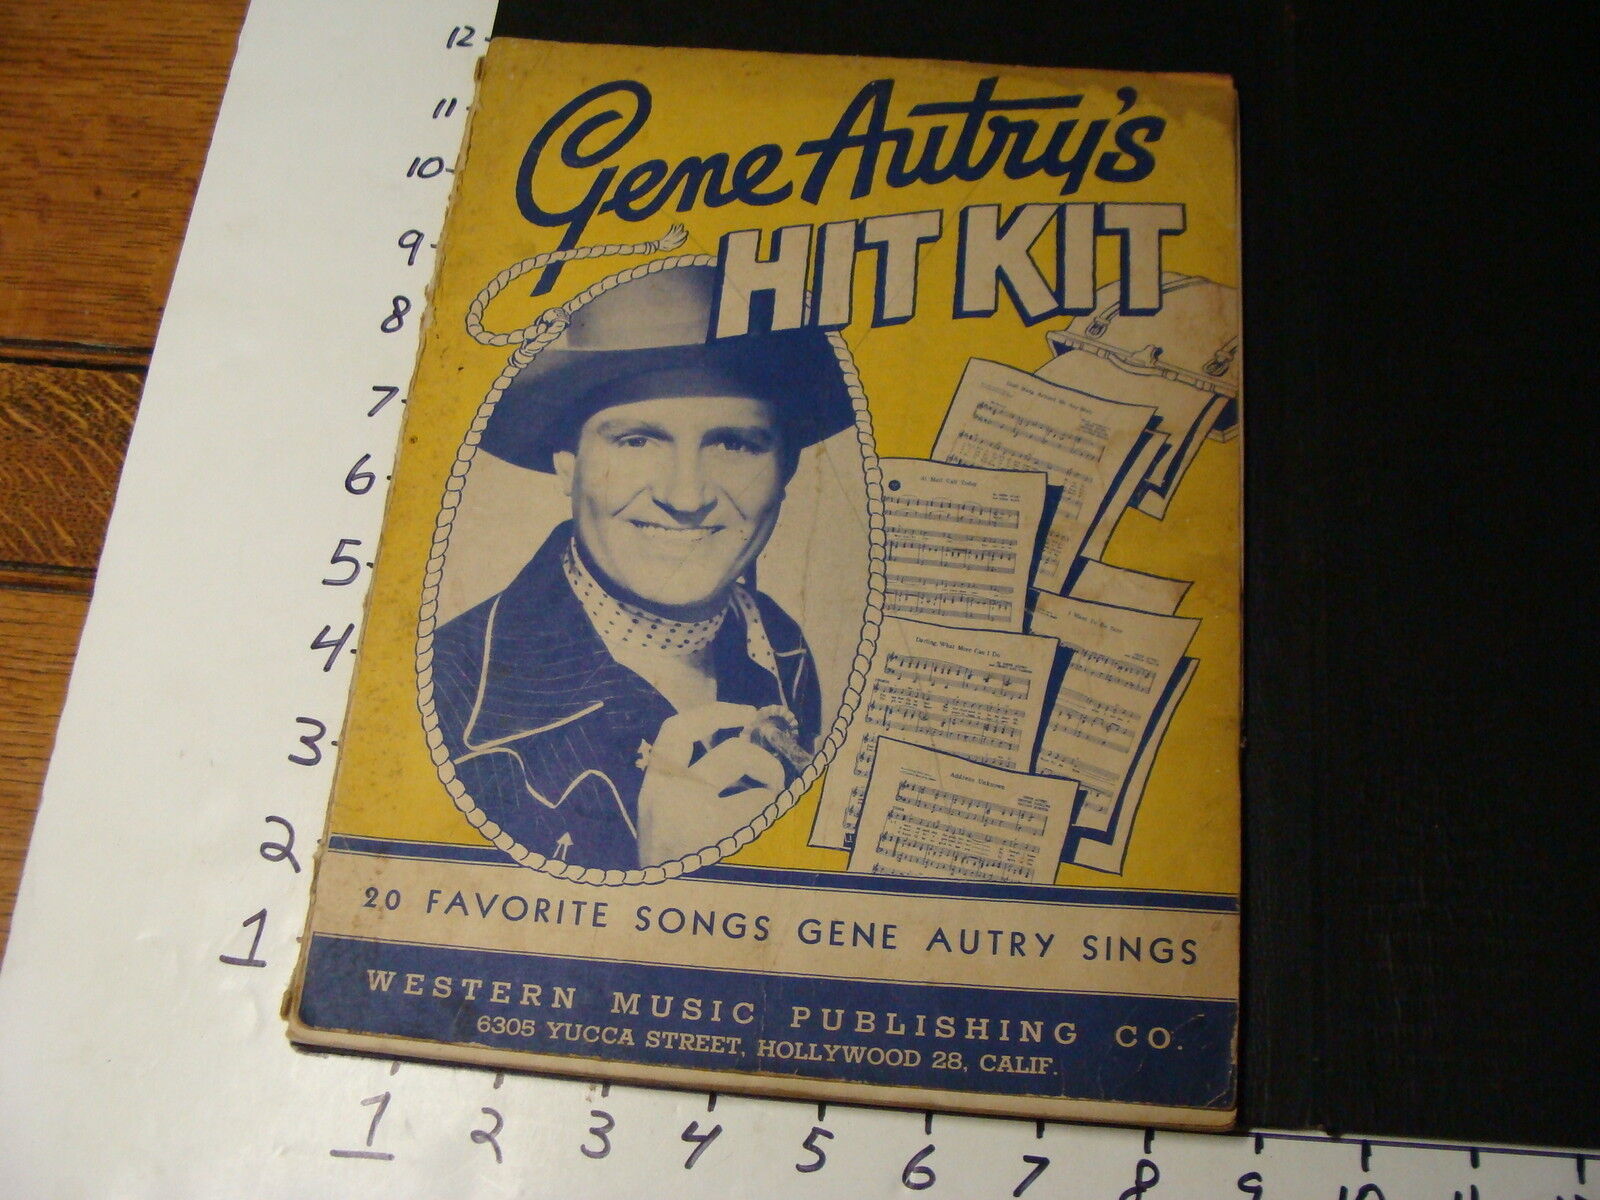 1946 gene autry\'s hit kit, 20 favorite songs gene autry sings